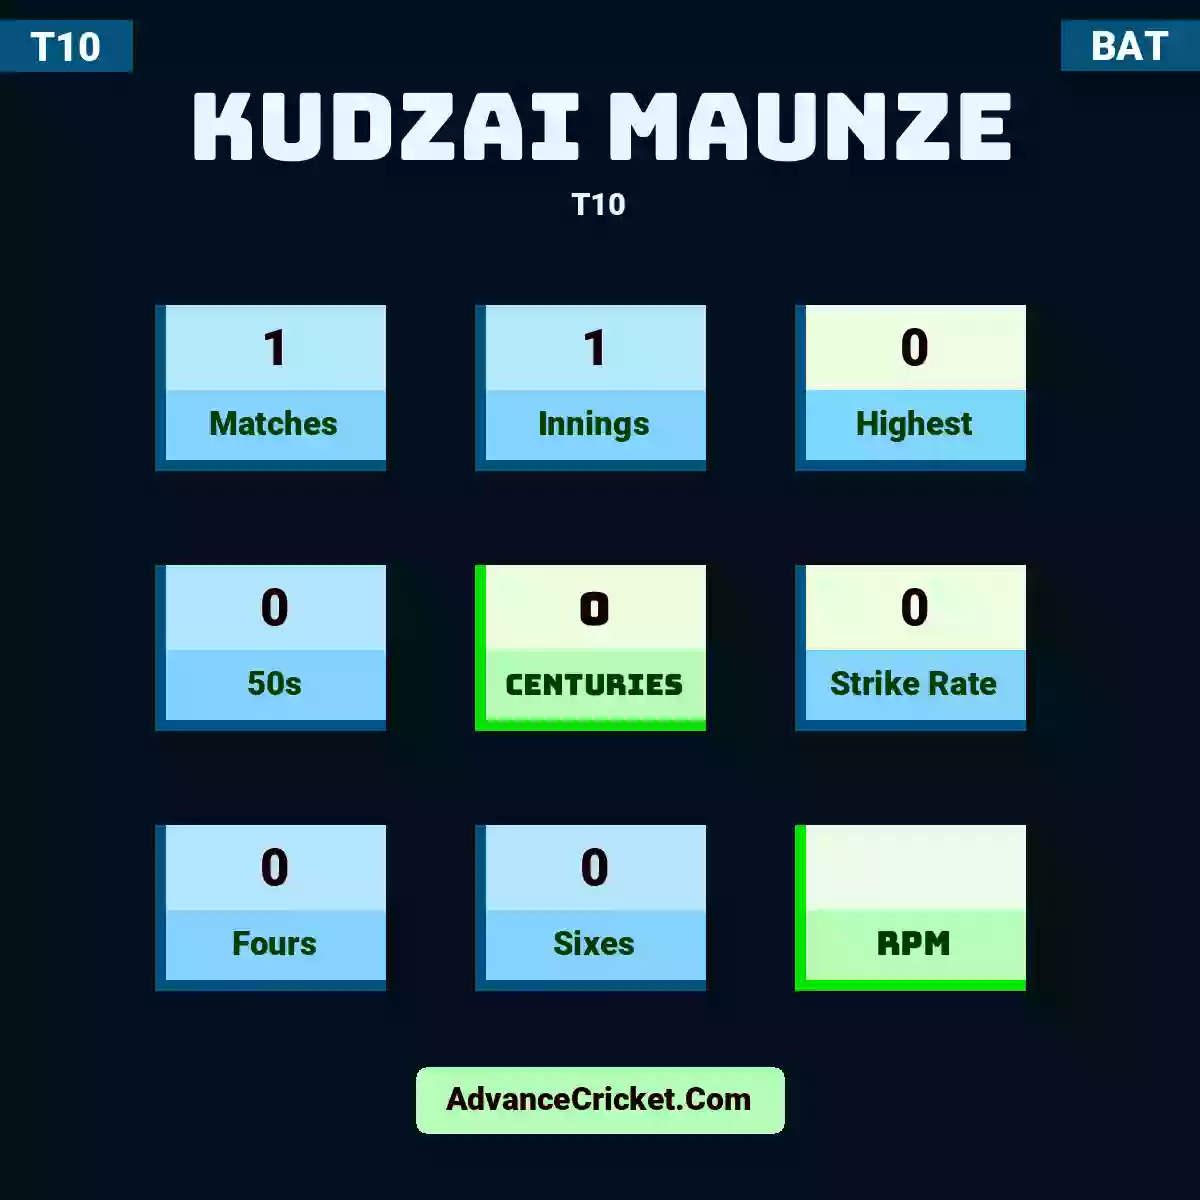 Kudzai Maunze T10 , Kudzai Maunze played 1 matches, scored 0 runs as highest, 0 half-centuries, and 0 centuries, with a strike rate of 0. K.Maunze hit 0 fours and 0 sixes.